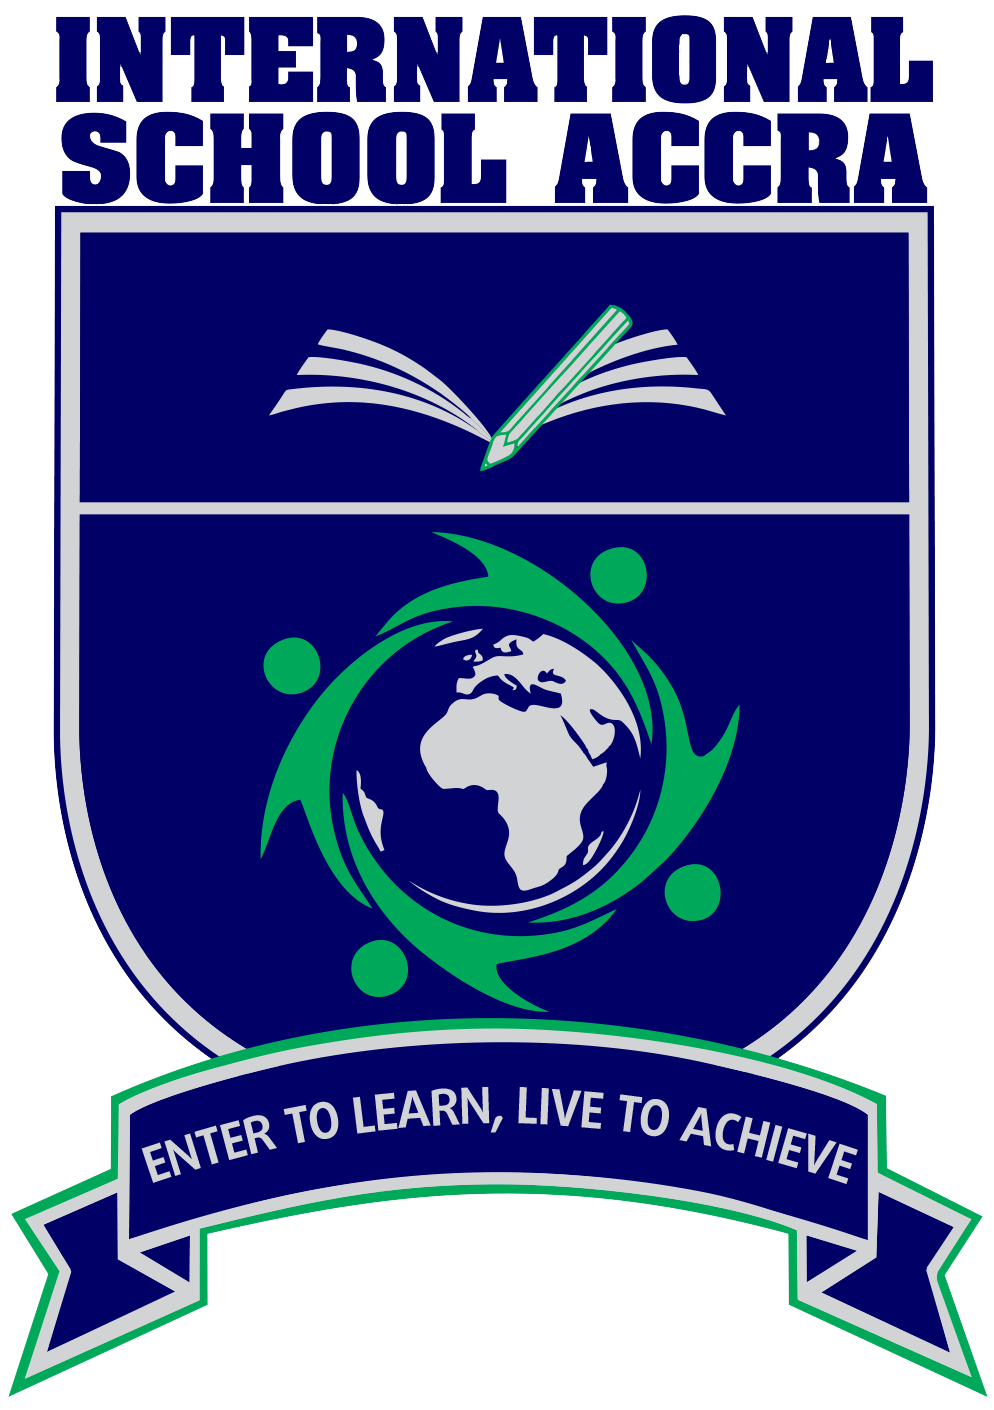 Careers - International School of Accra